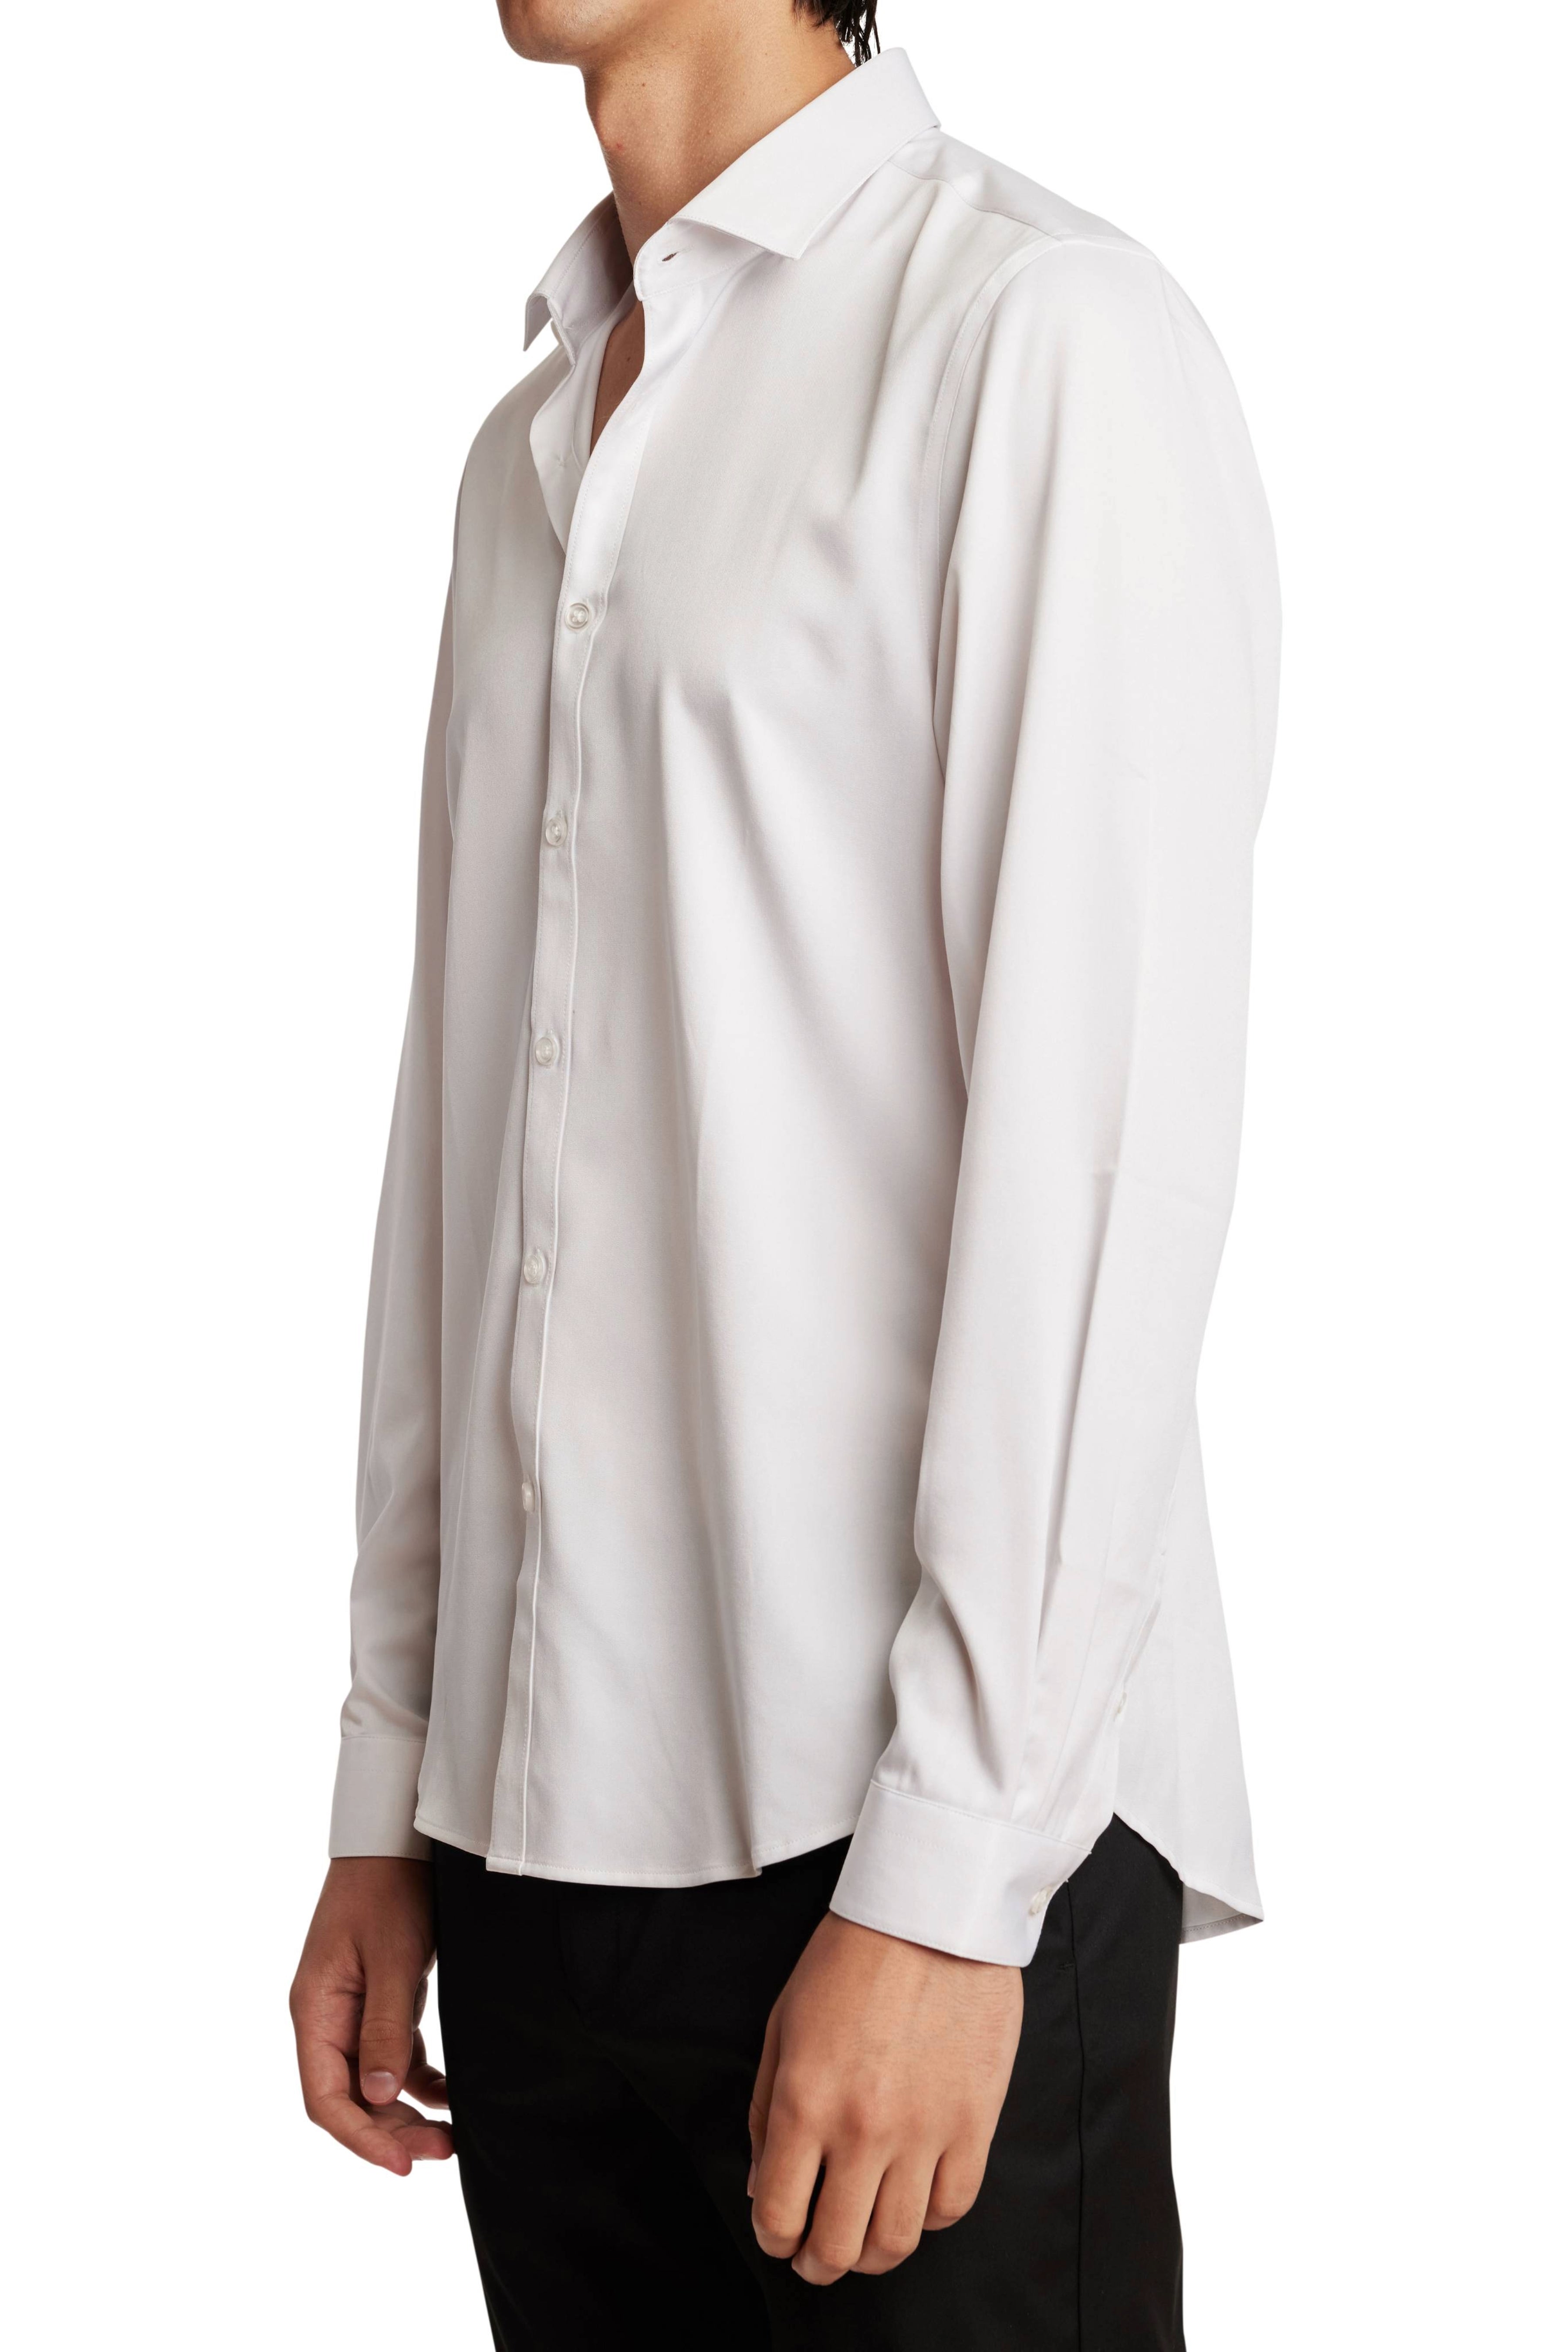 Samuel Spread Collar Shirt - Pearl White